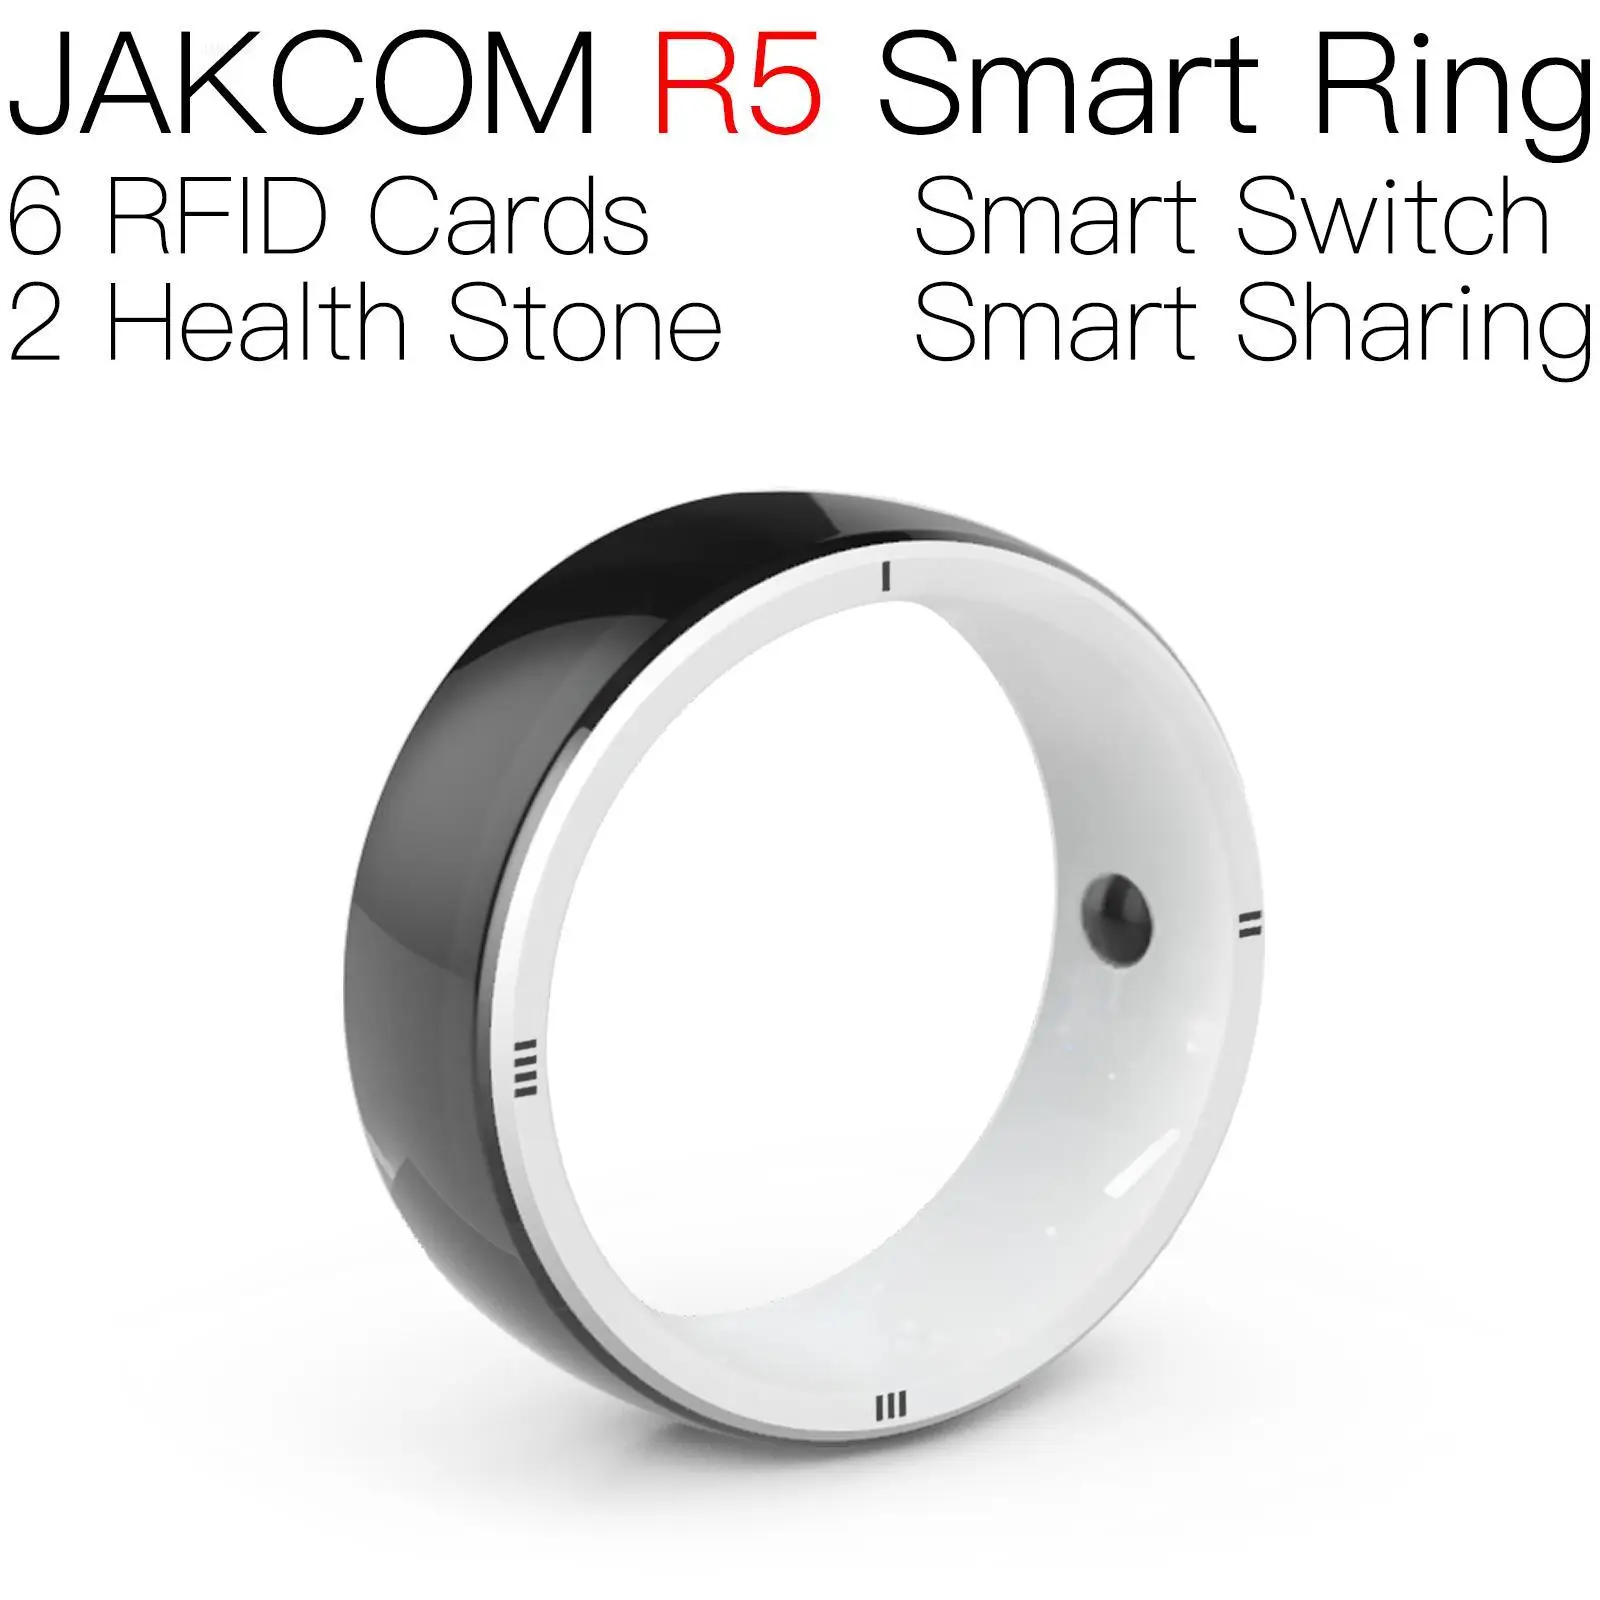 

JAKCOM R5 Smart Ring For men women spain official store aquara hub lucky videoland htv 7 brasil original gt 2